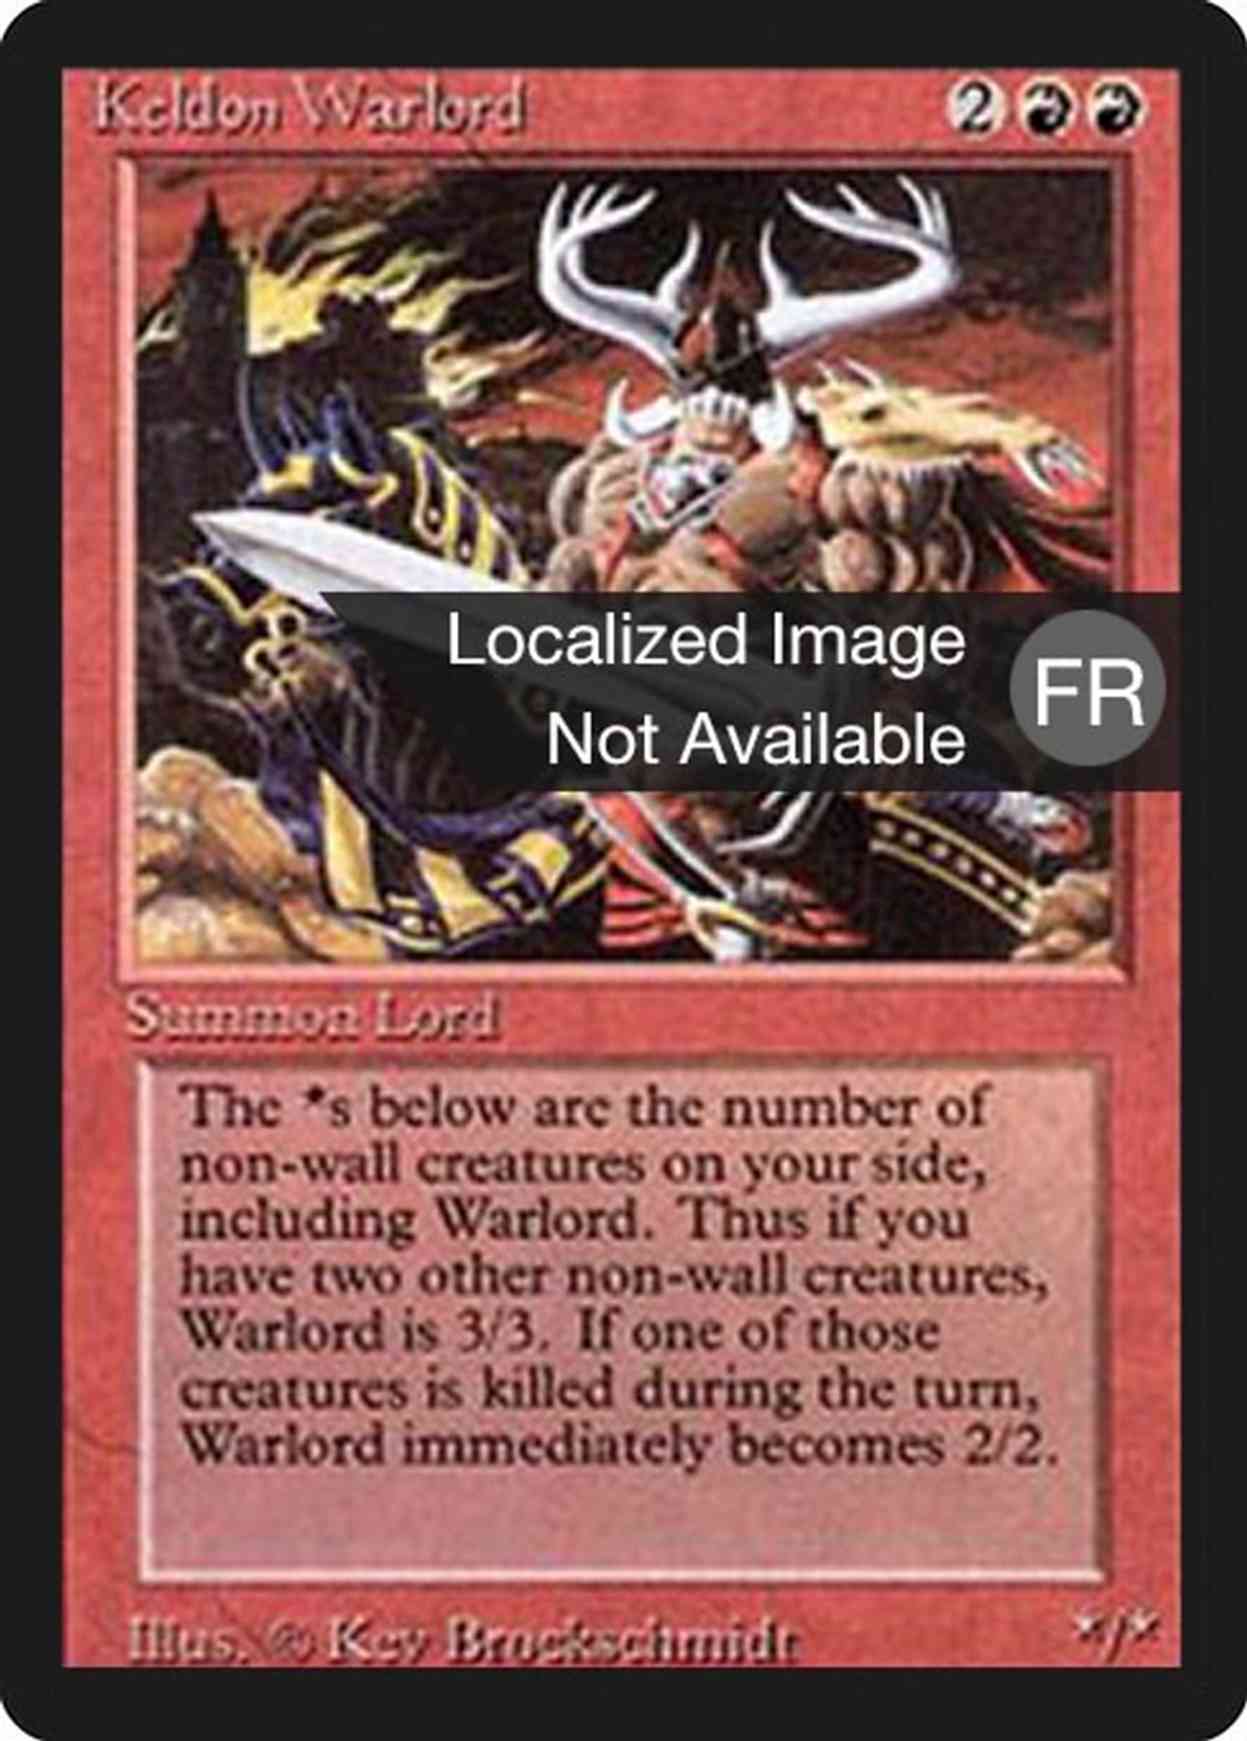 Keldon Warlord magic card front